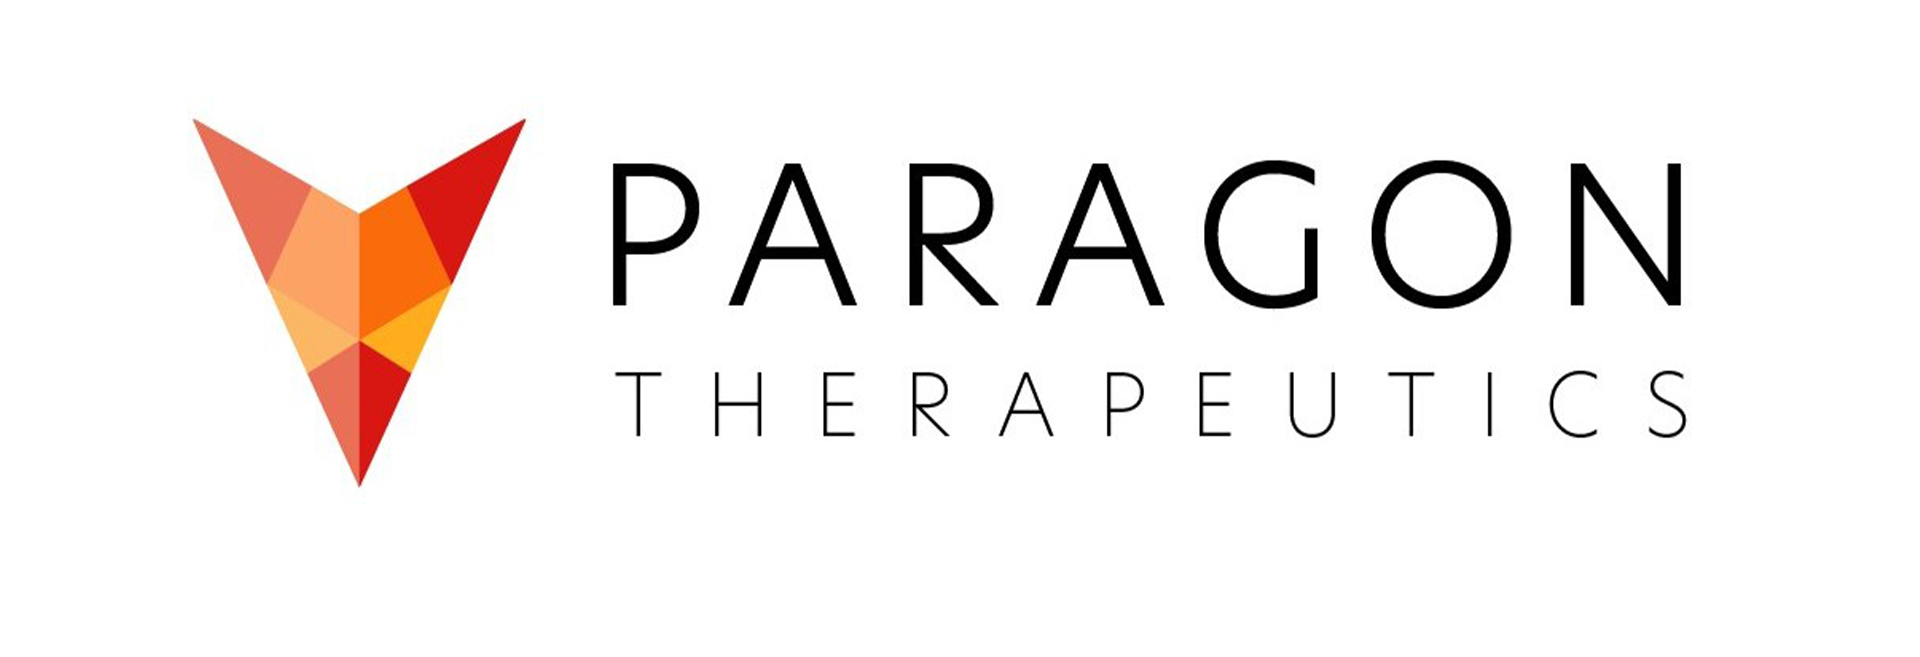 Paragon Therapeutics